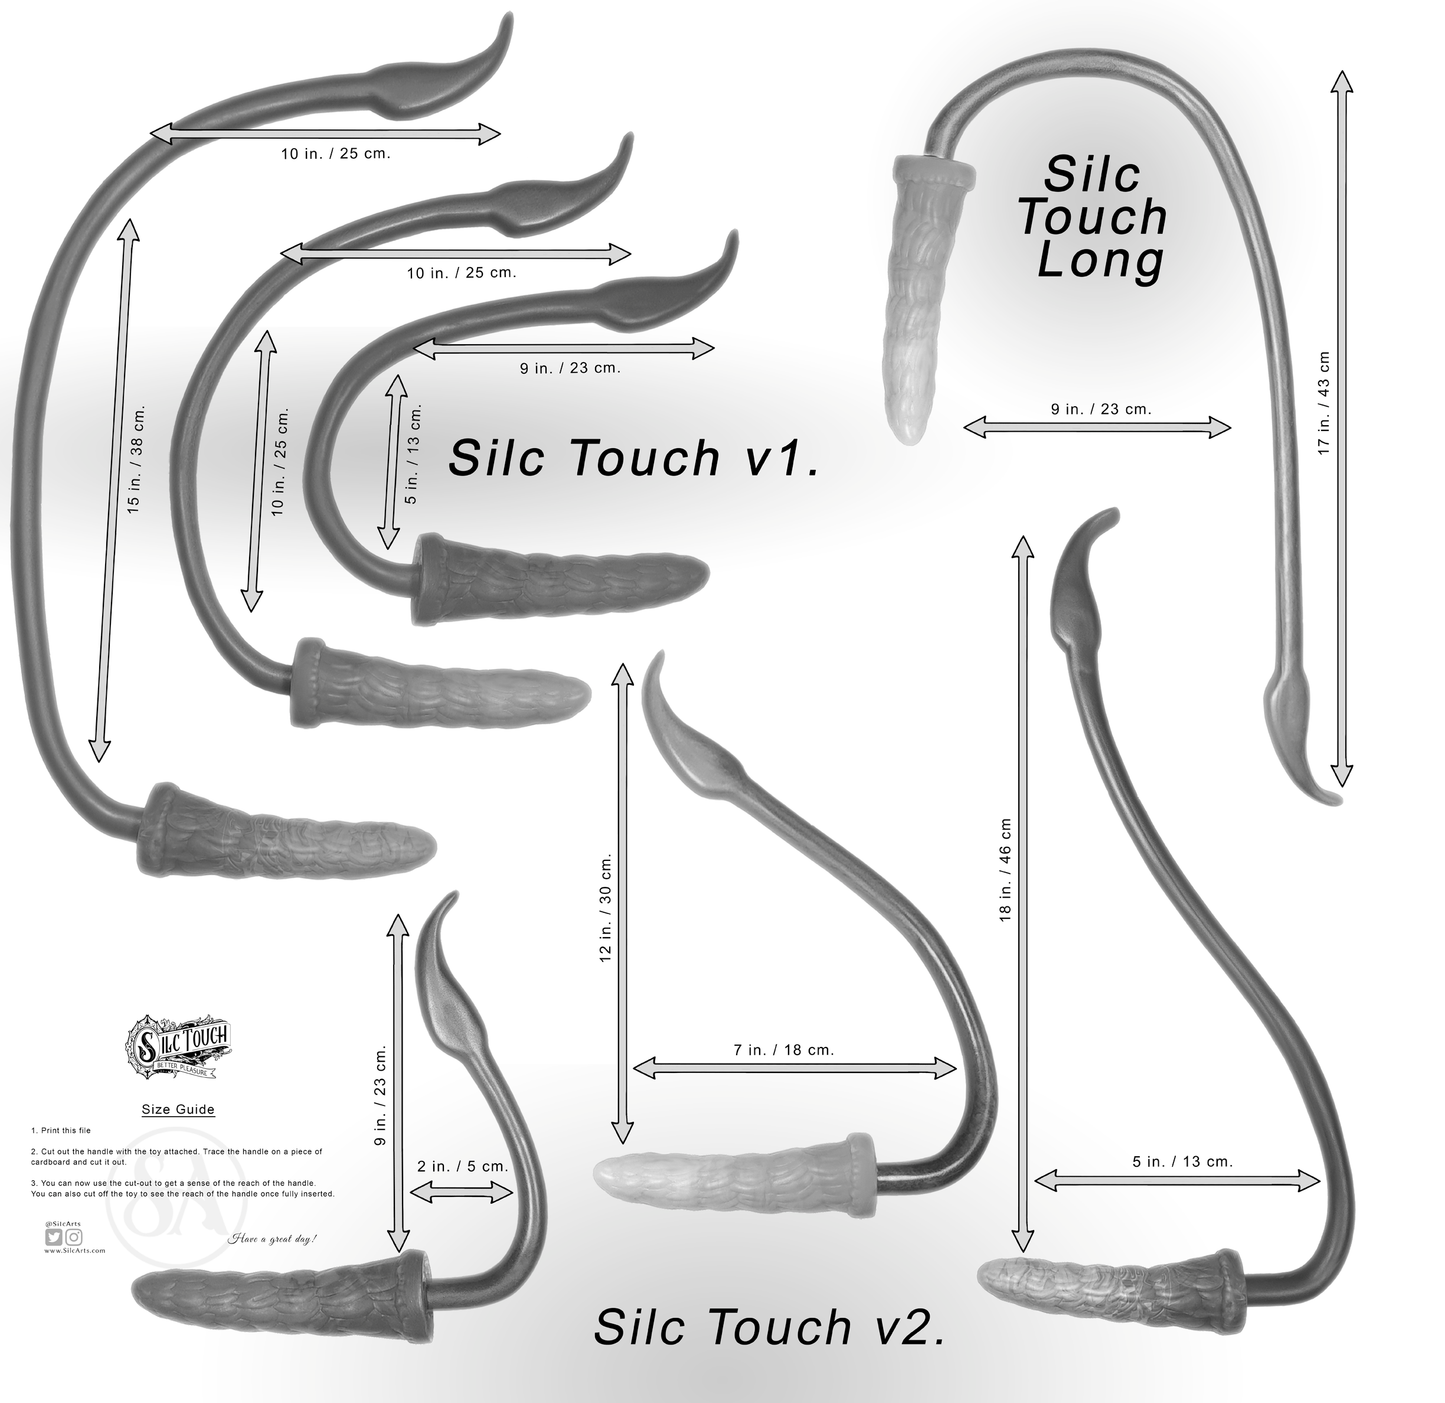 Silc Touch v2. - Ergonomic handle - Suction cup - Sm